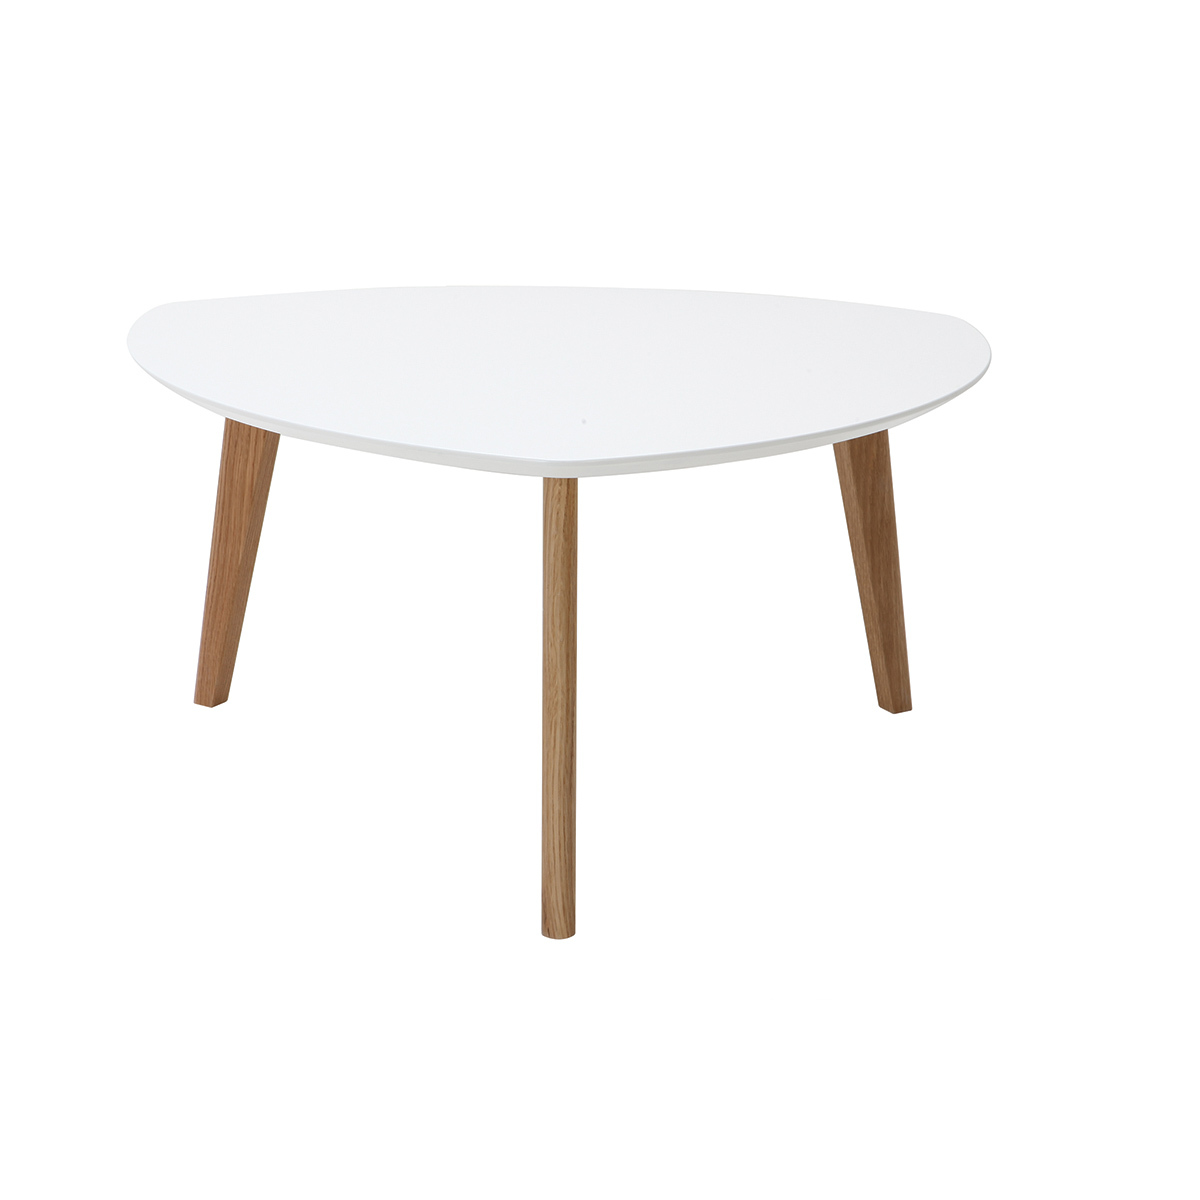 Table basse scandinave blanc et bois clair chêne L80 cm EKKA vue1